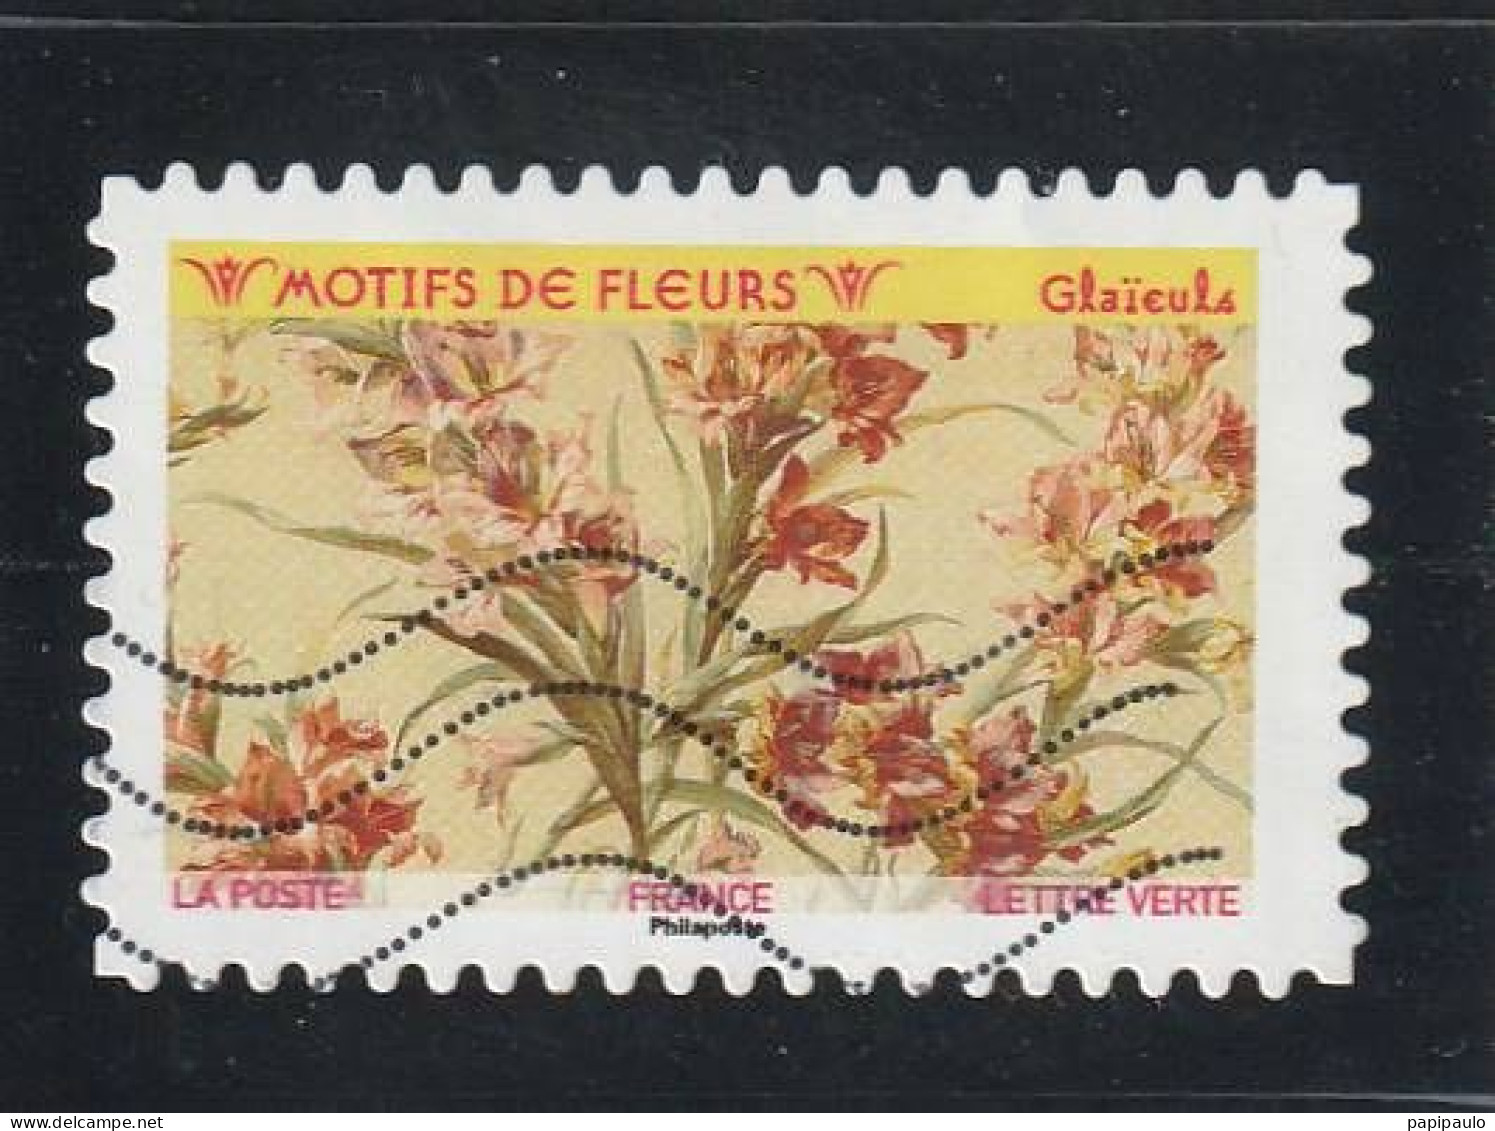 FRANCE 2021 Y&T 1989 Lettre Verte Flore - Used Stamps